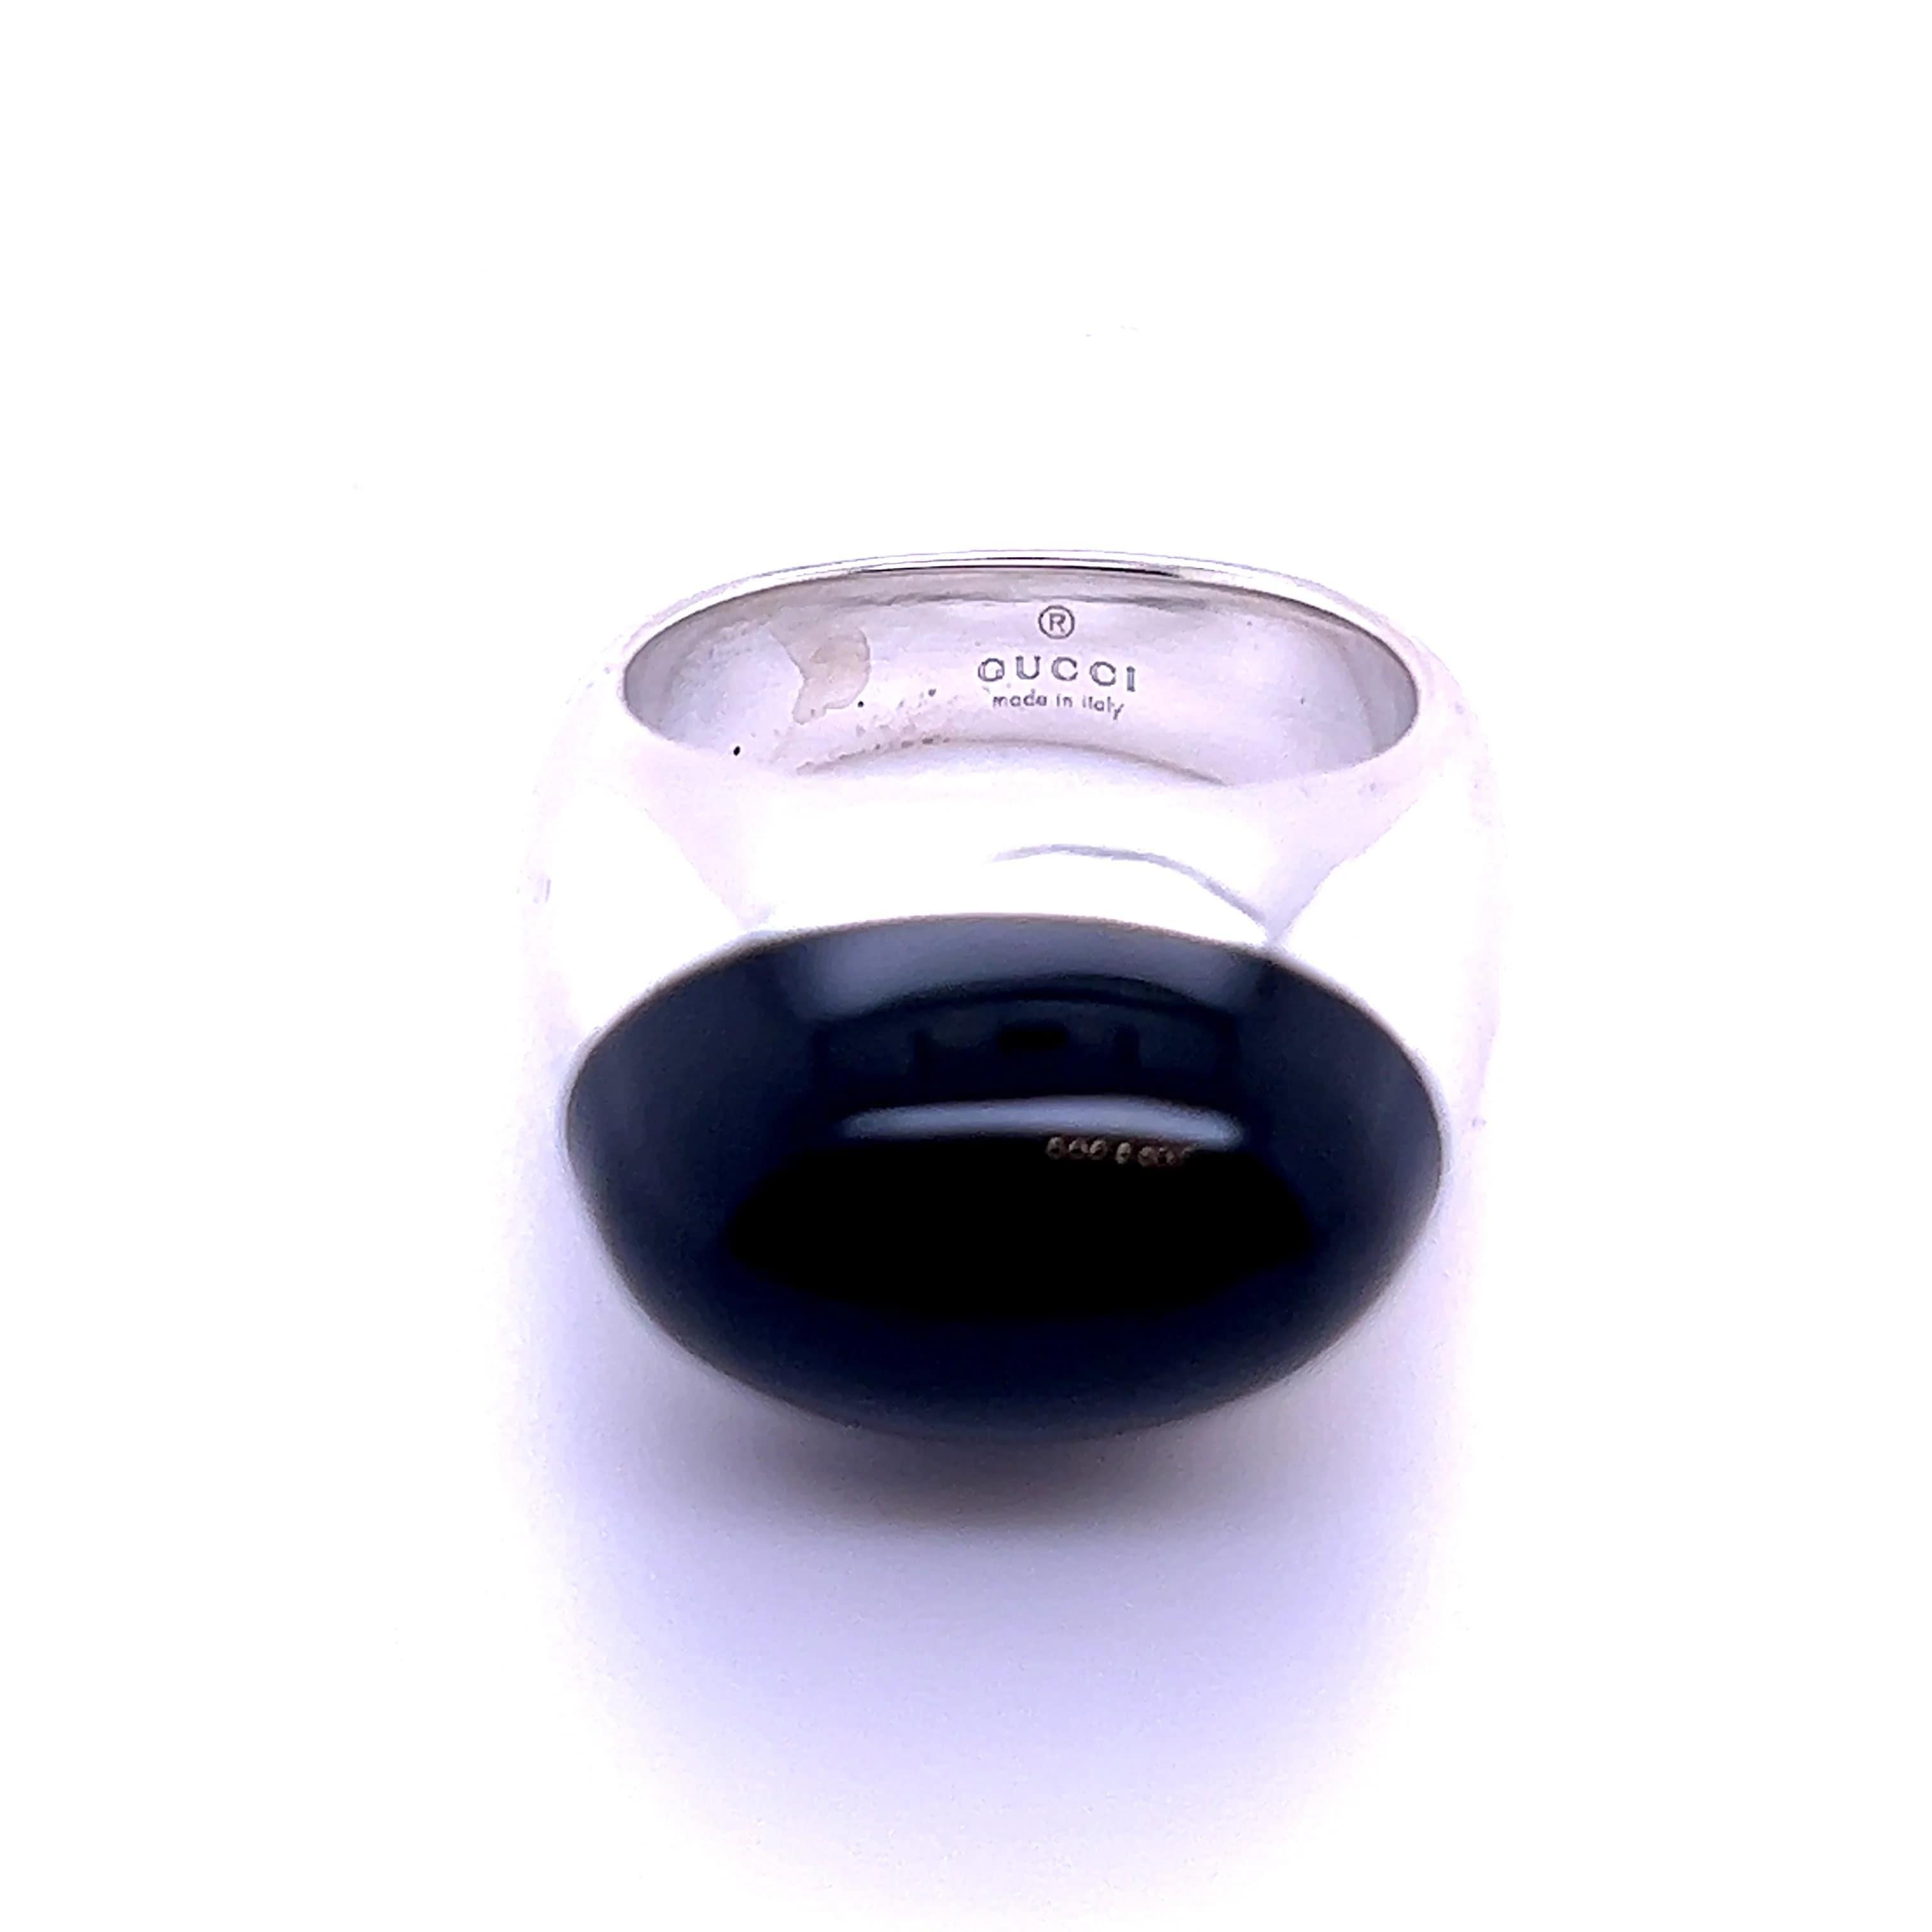 Gucci Nachlass Schwarzer Onyx Ring Größe 6,75 Sterlingsilber 6 mm  Damen im Angebot